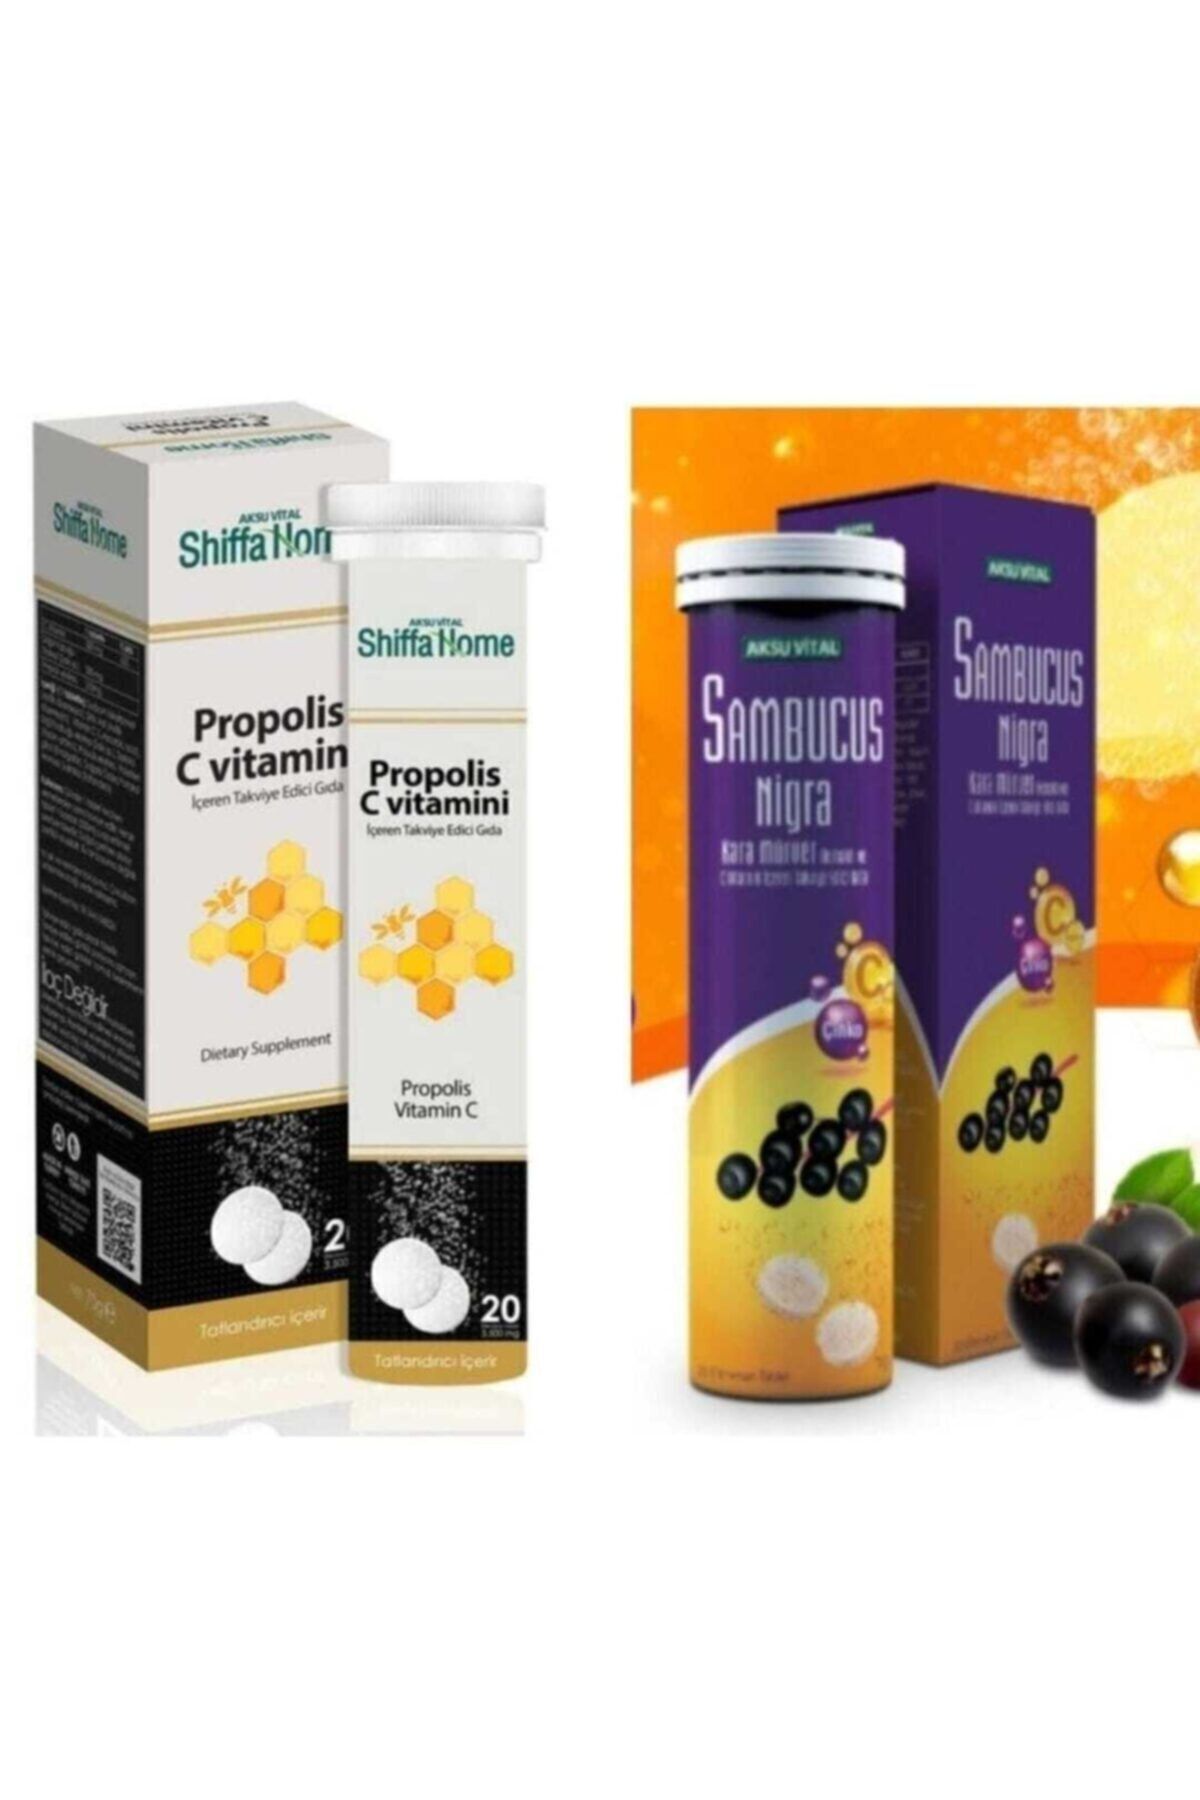 Shiffa Home Propolis & C Vitamini Efervesan 20 Tablet & Sambucus Nigra Efervesan 20 Tablet